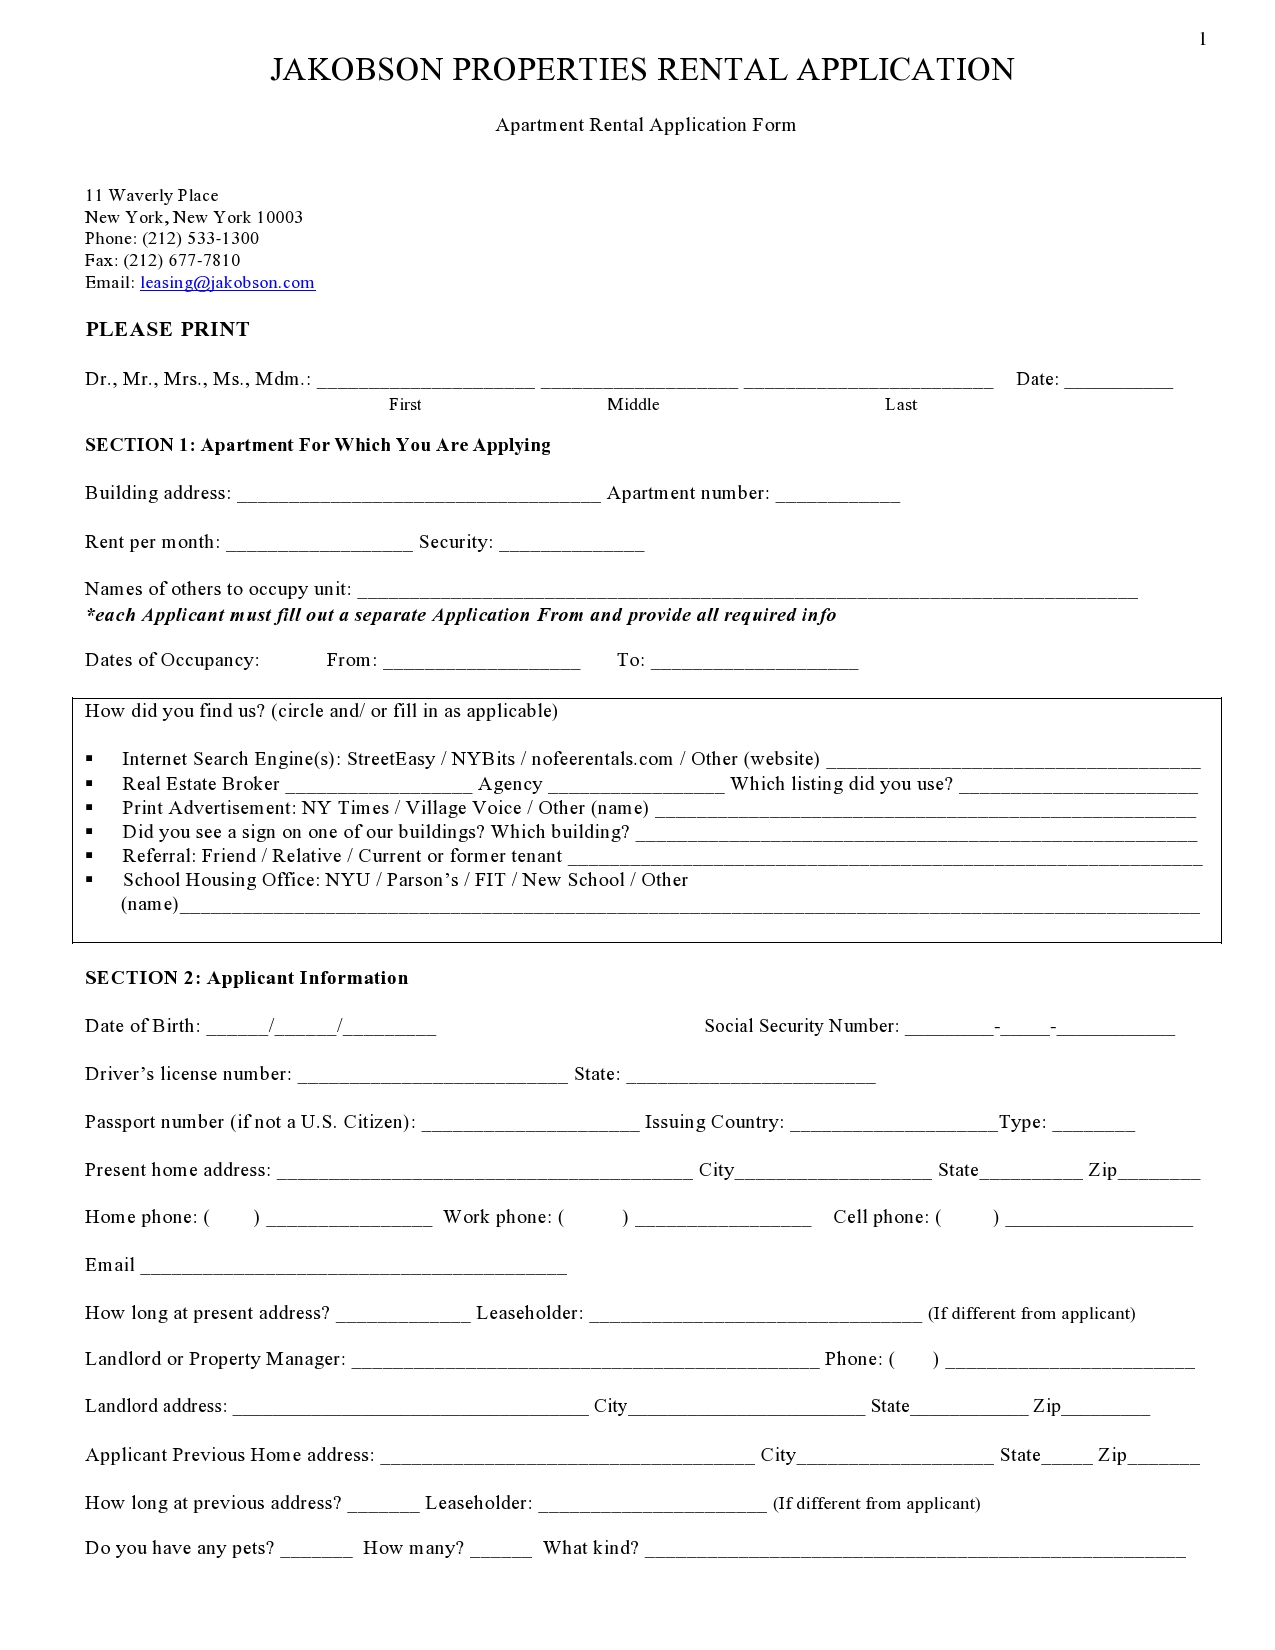 Free rental application form 38